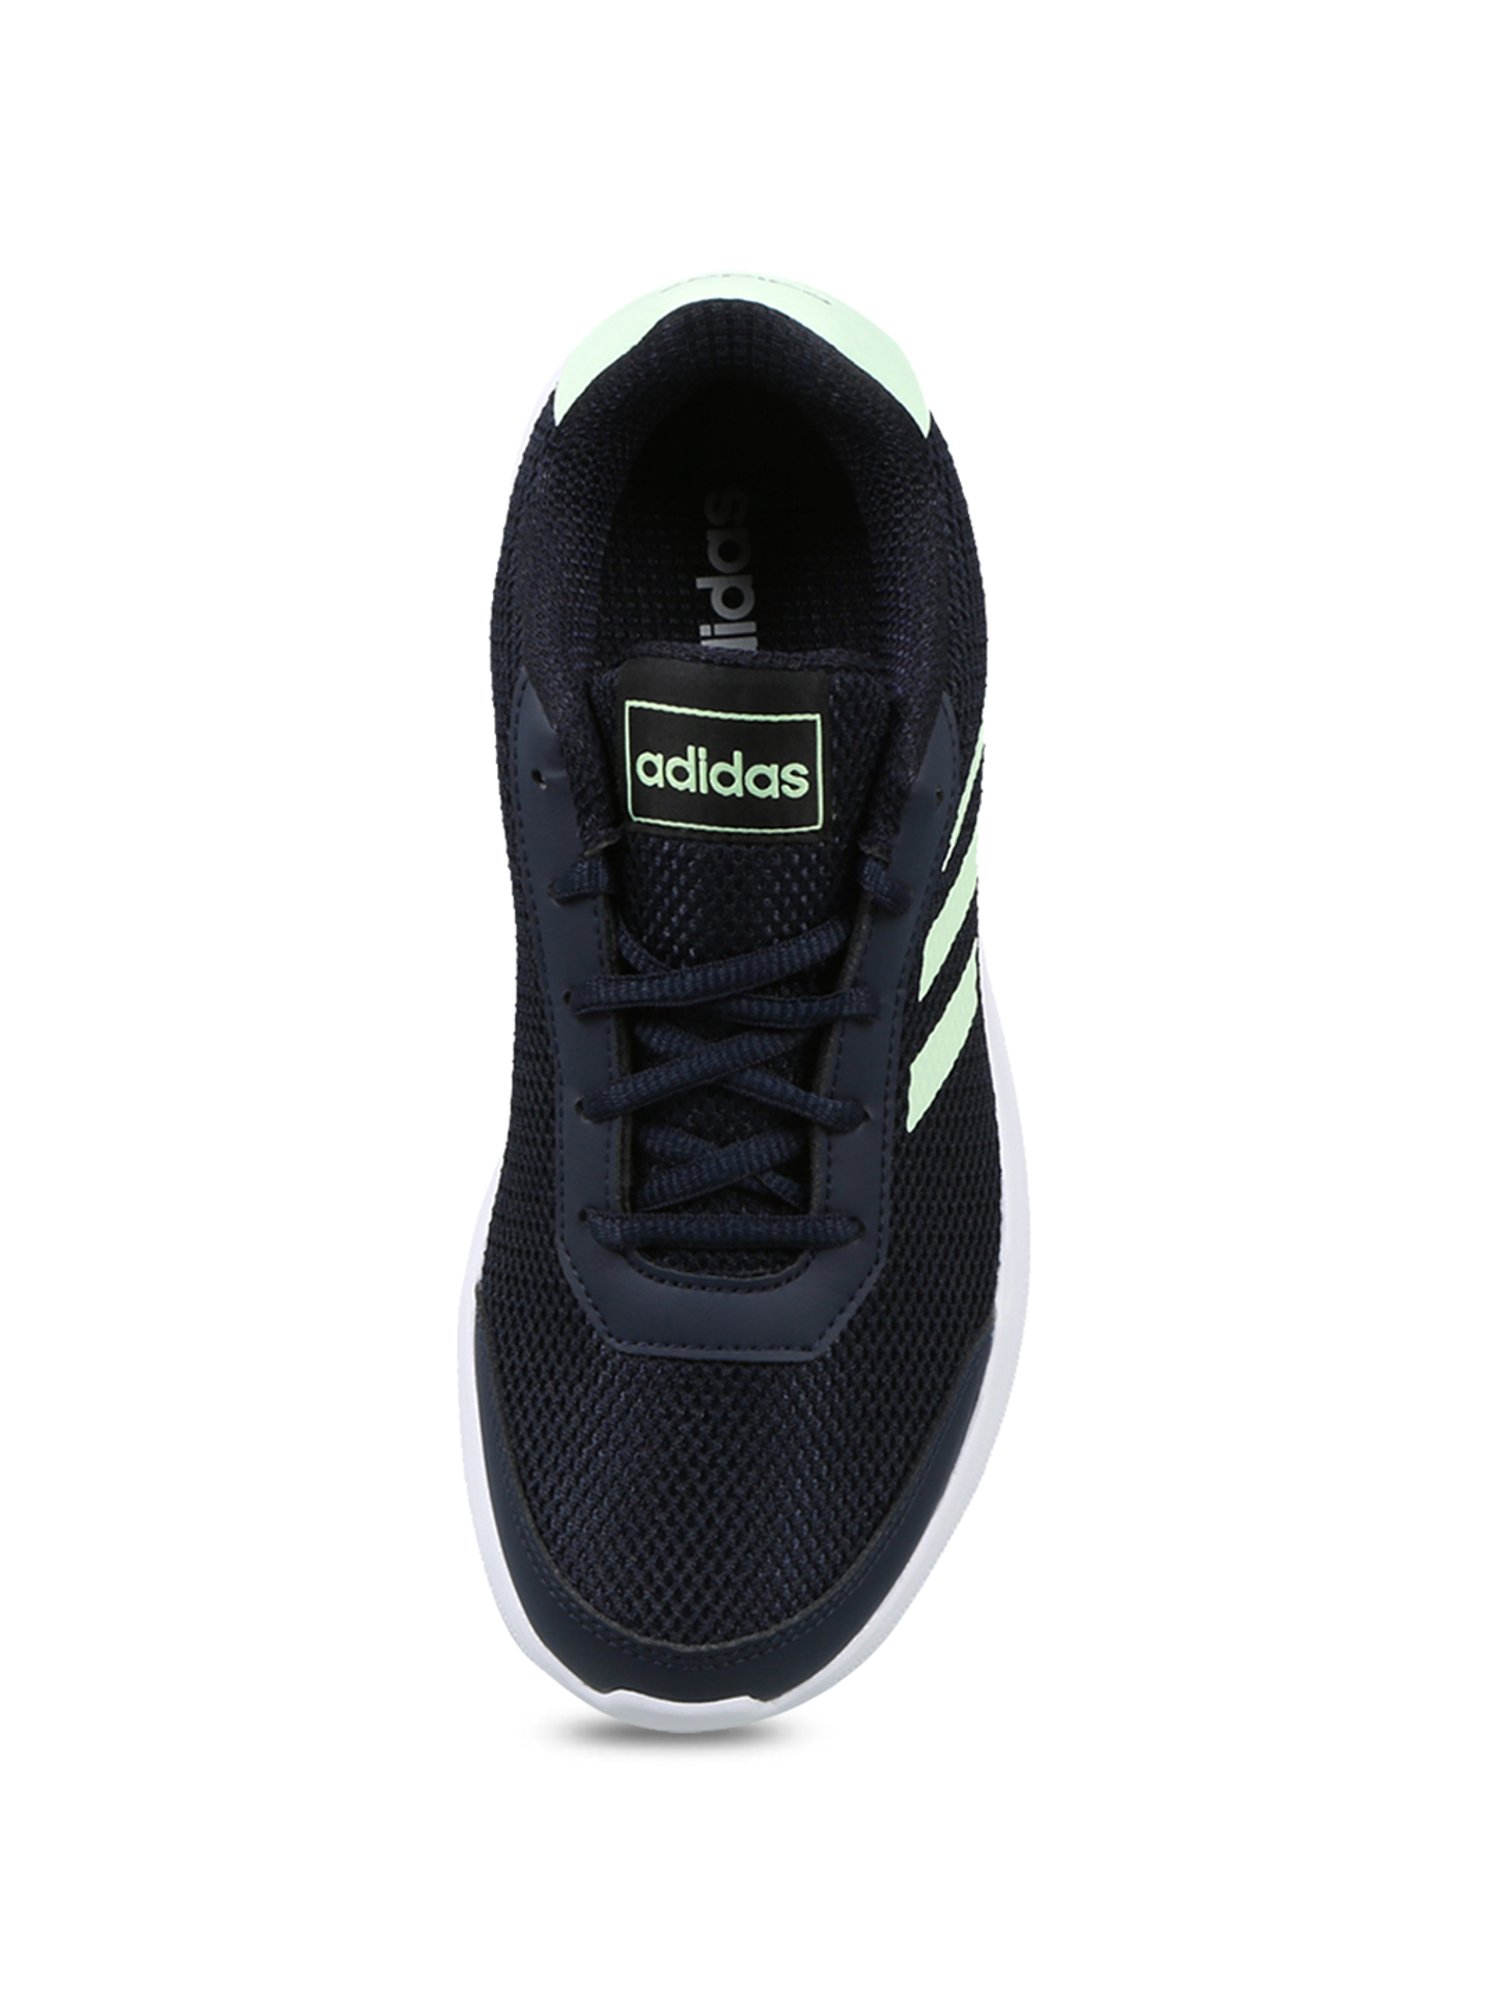 adidas yking 1. navy blue running shoes